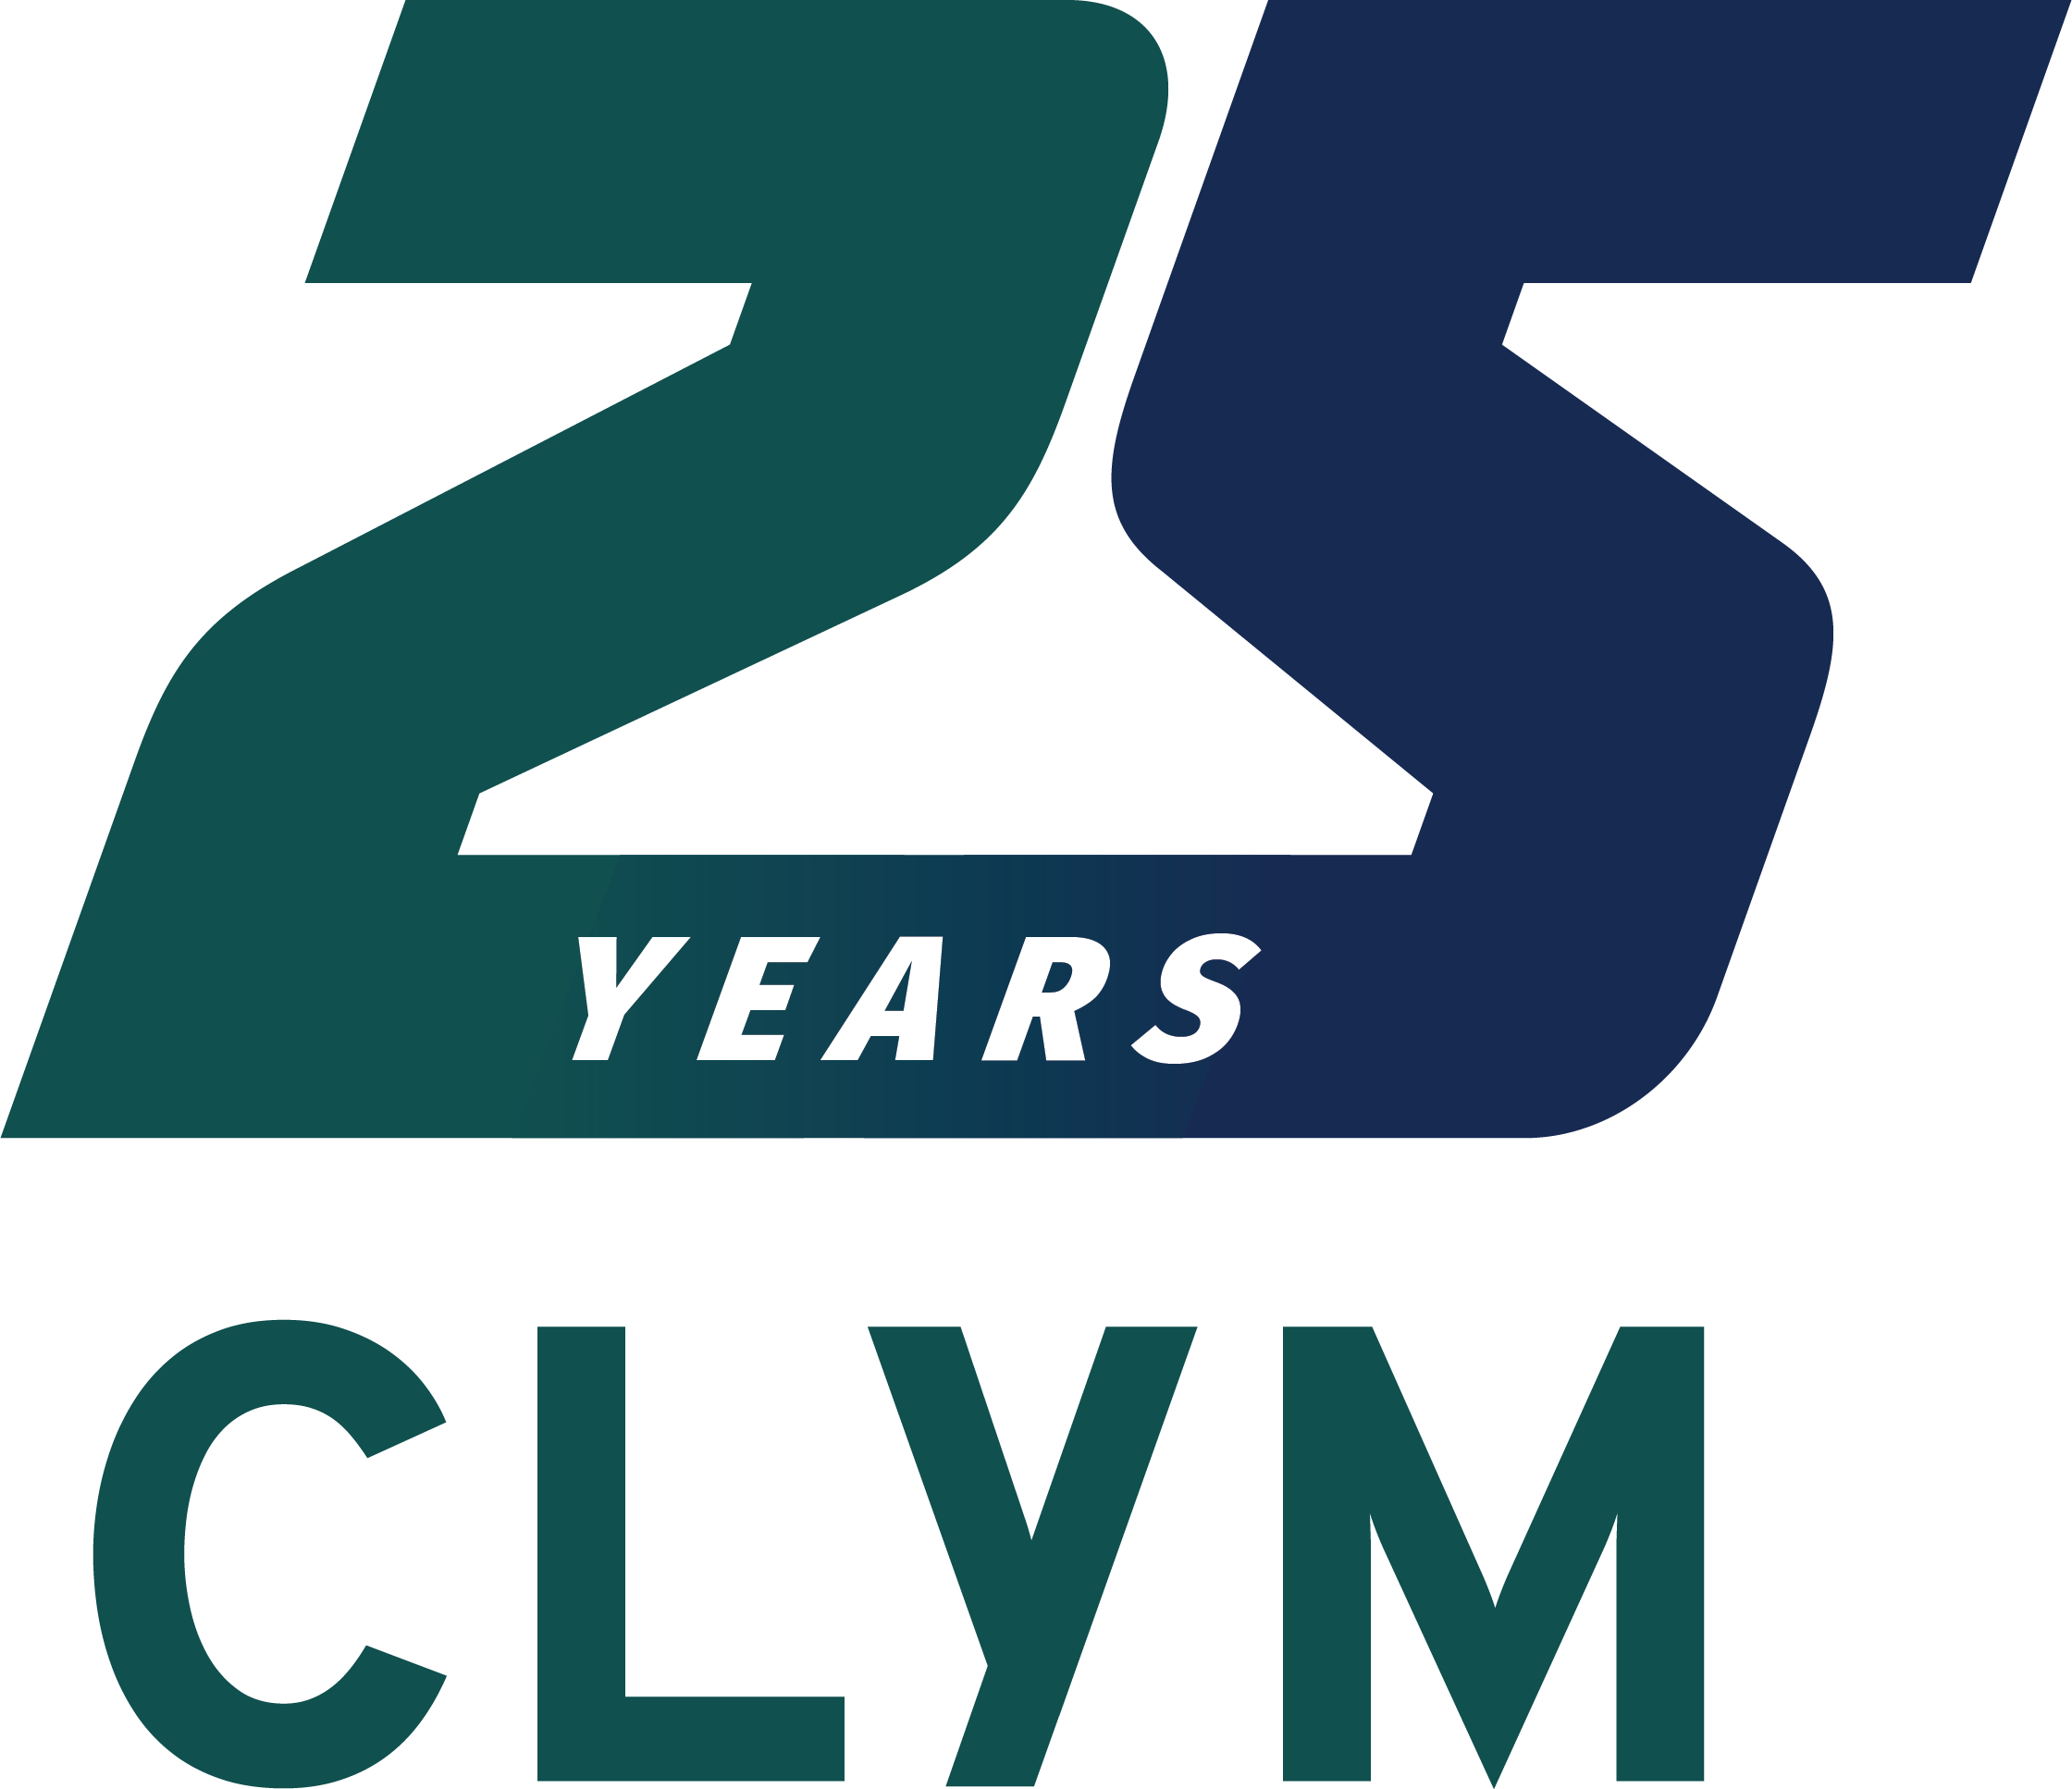 CLYM 25th anniversary logo